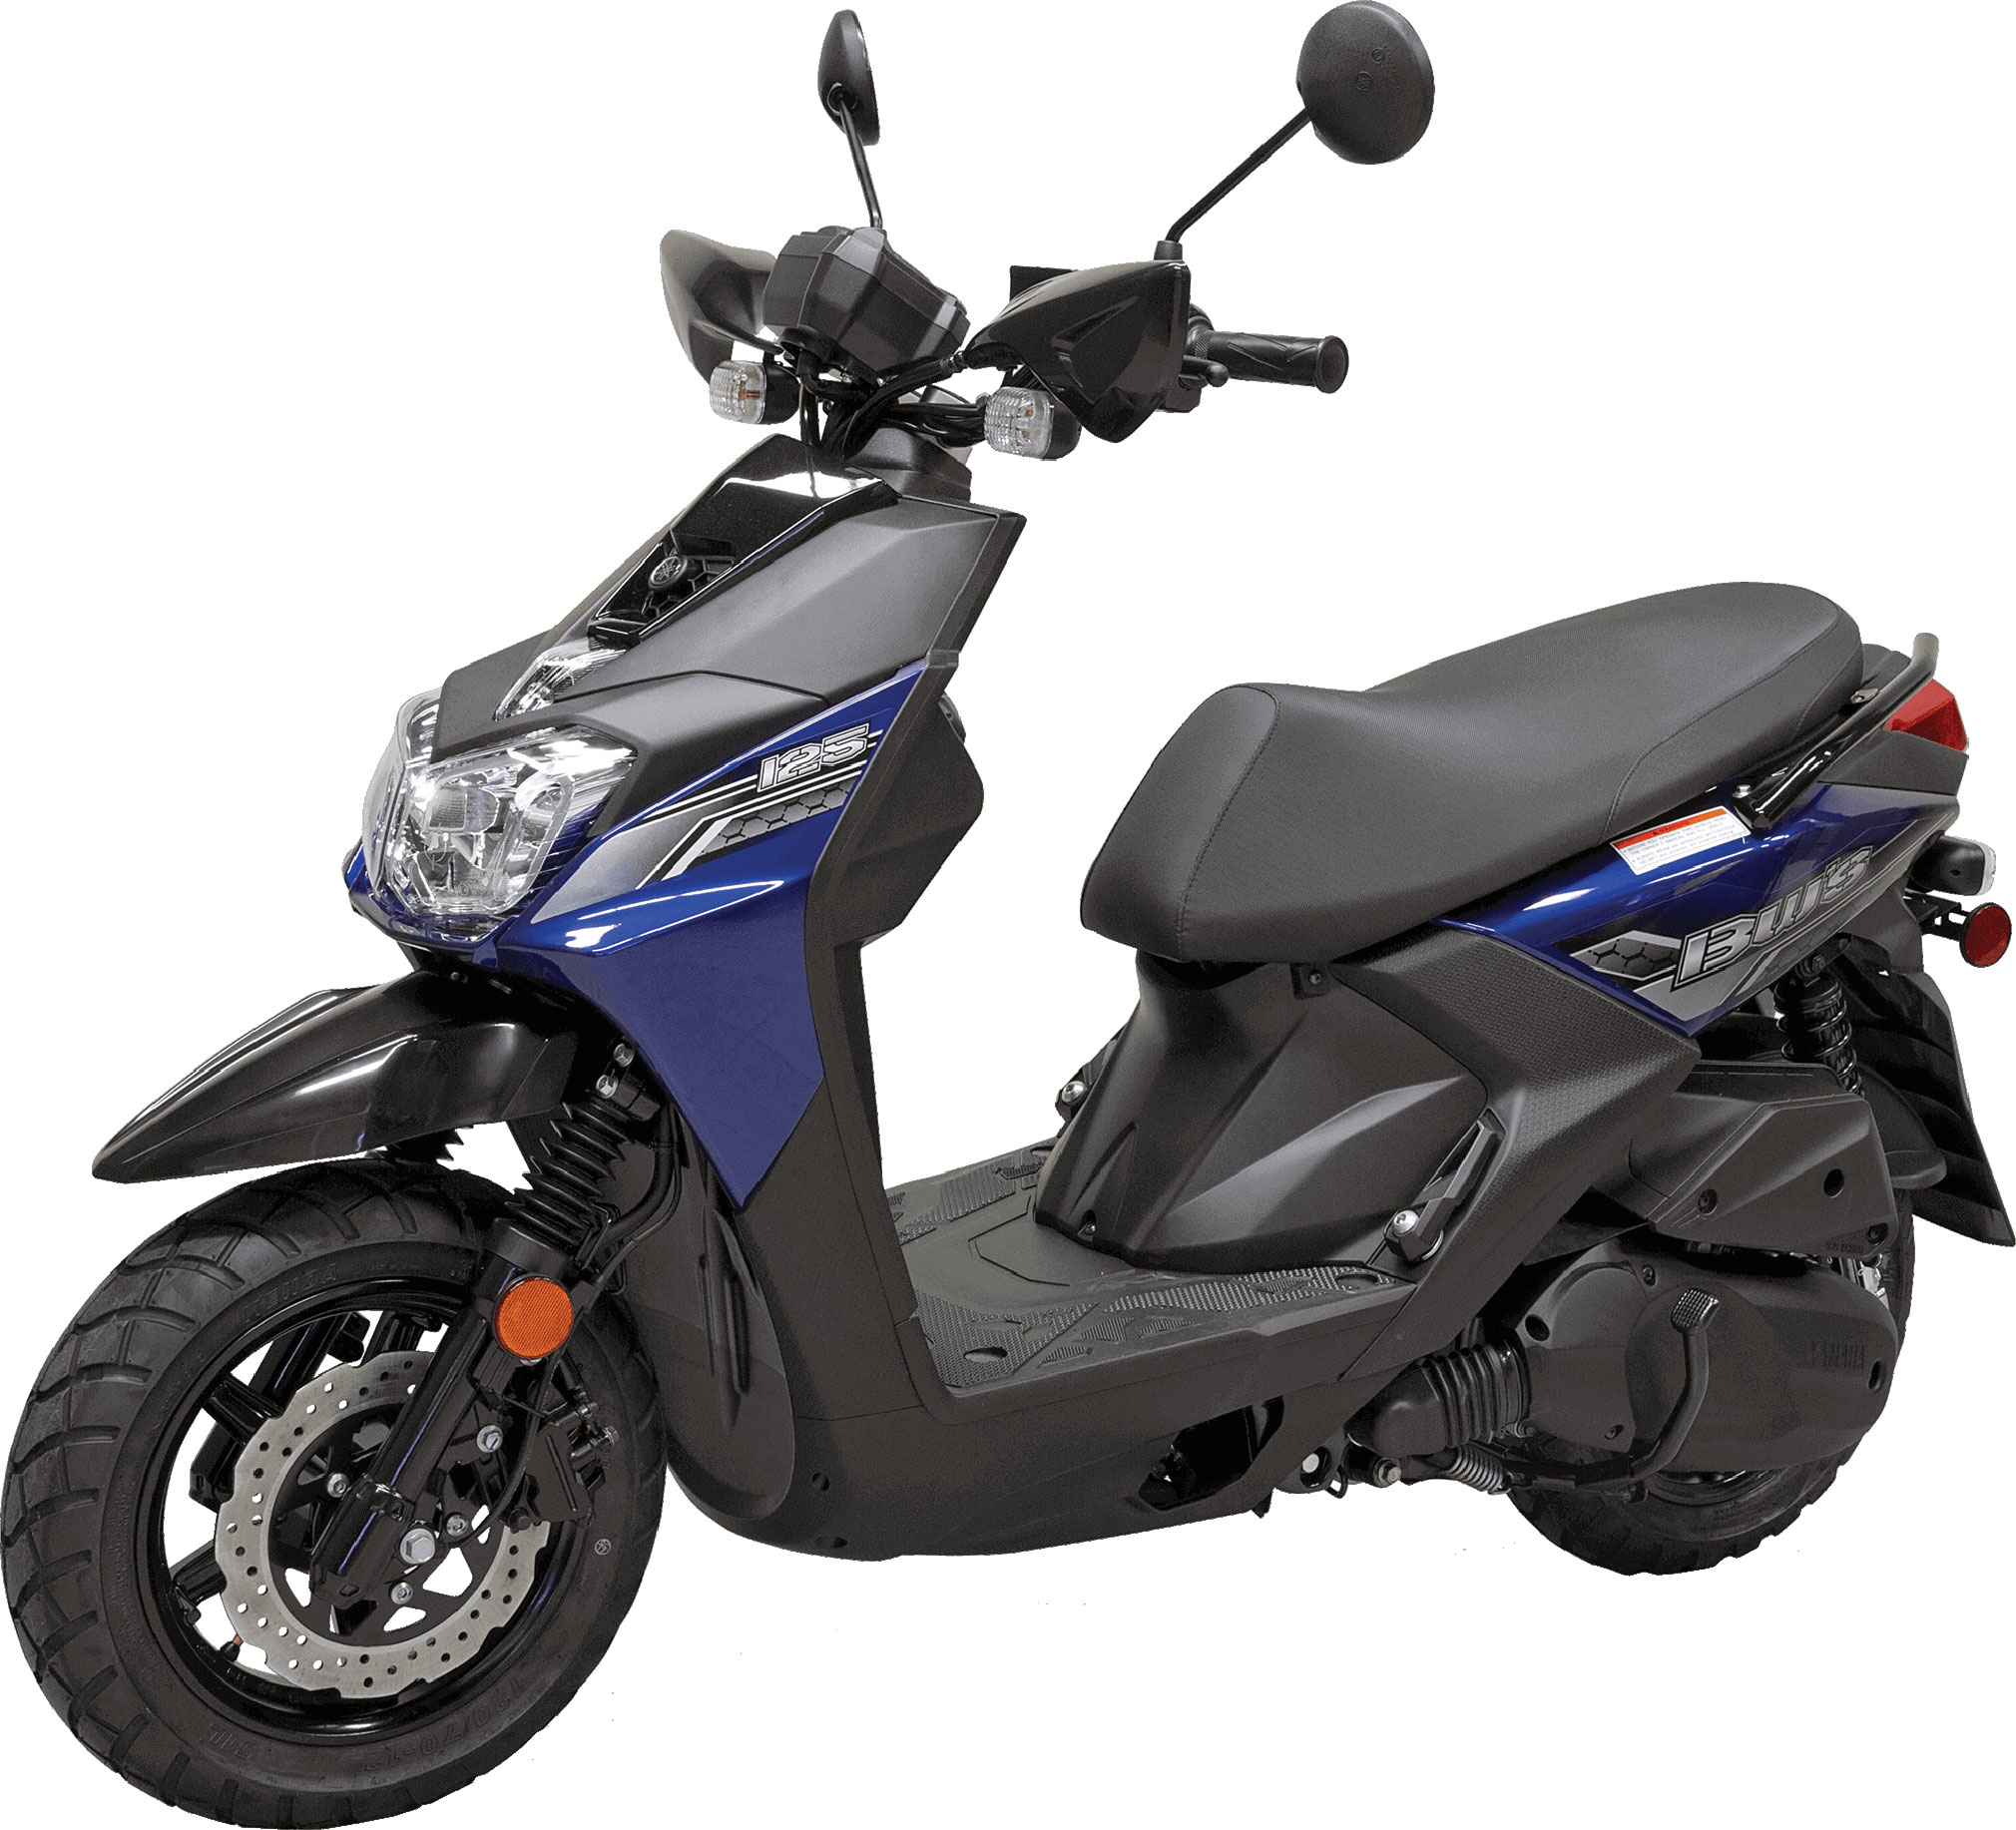 2020 Yamaha BWS 125 Guide • Total Motorcycle